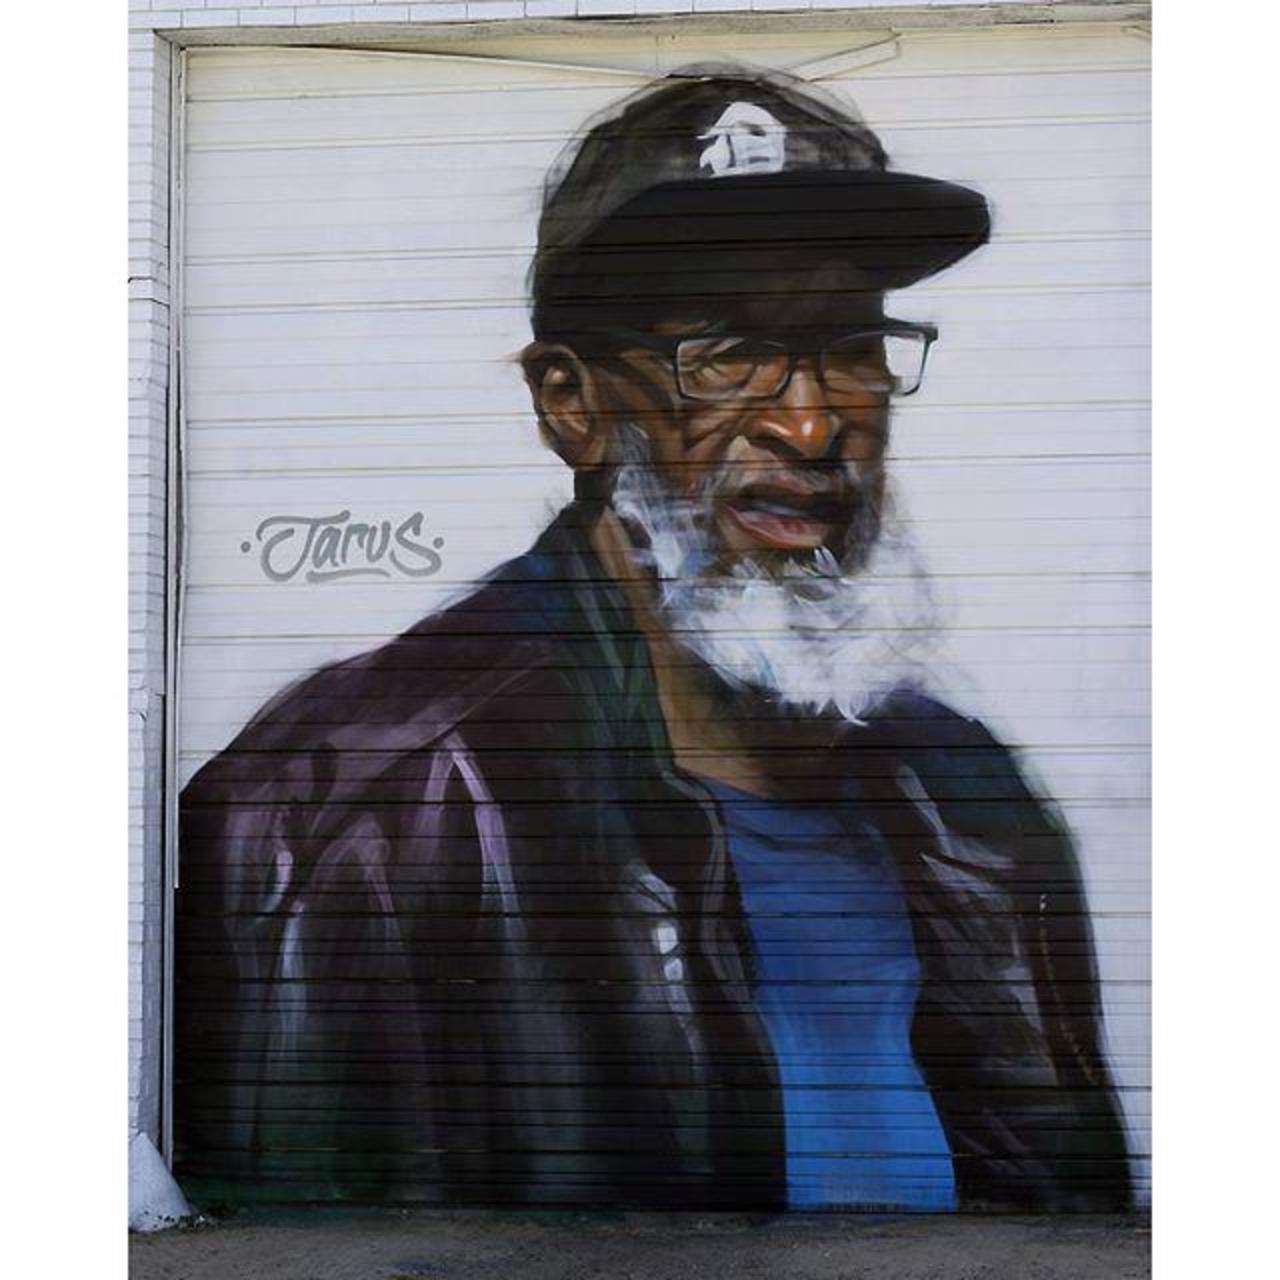 New mural by #graffiti artist Jarus for the Detroit Murals in the Market #streetart festival

http://wp.me/p2dpFM-38b http://t.co/3XBsBBPBWC